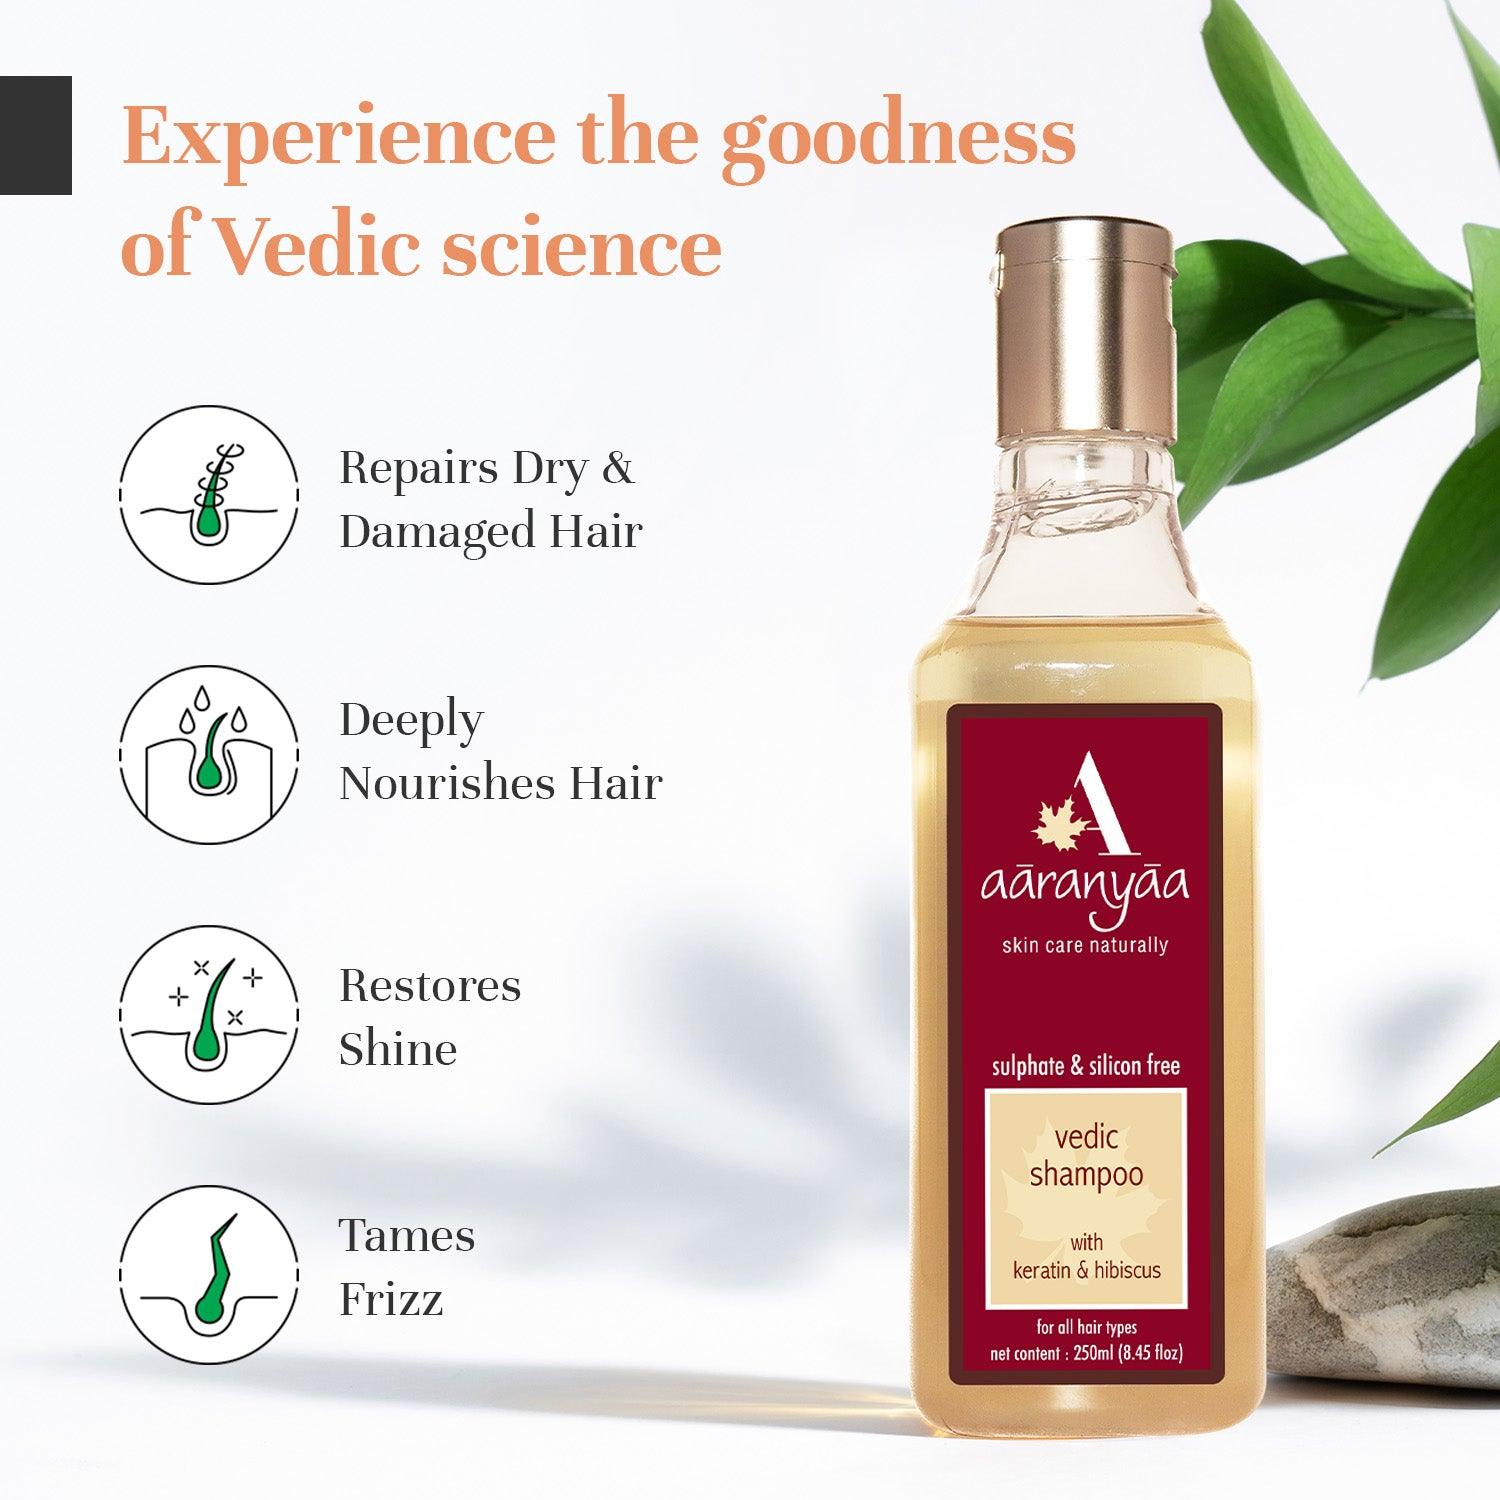 Vedic Shampoo Experience the goodness